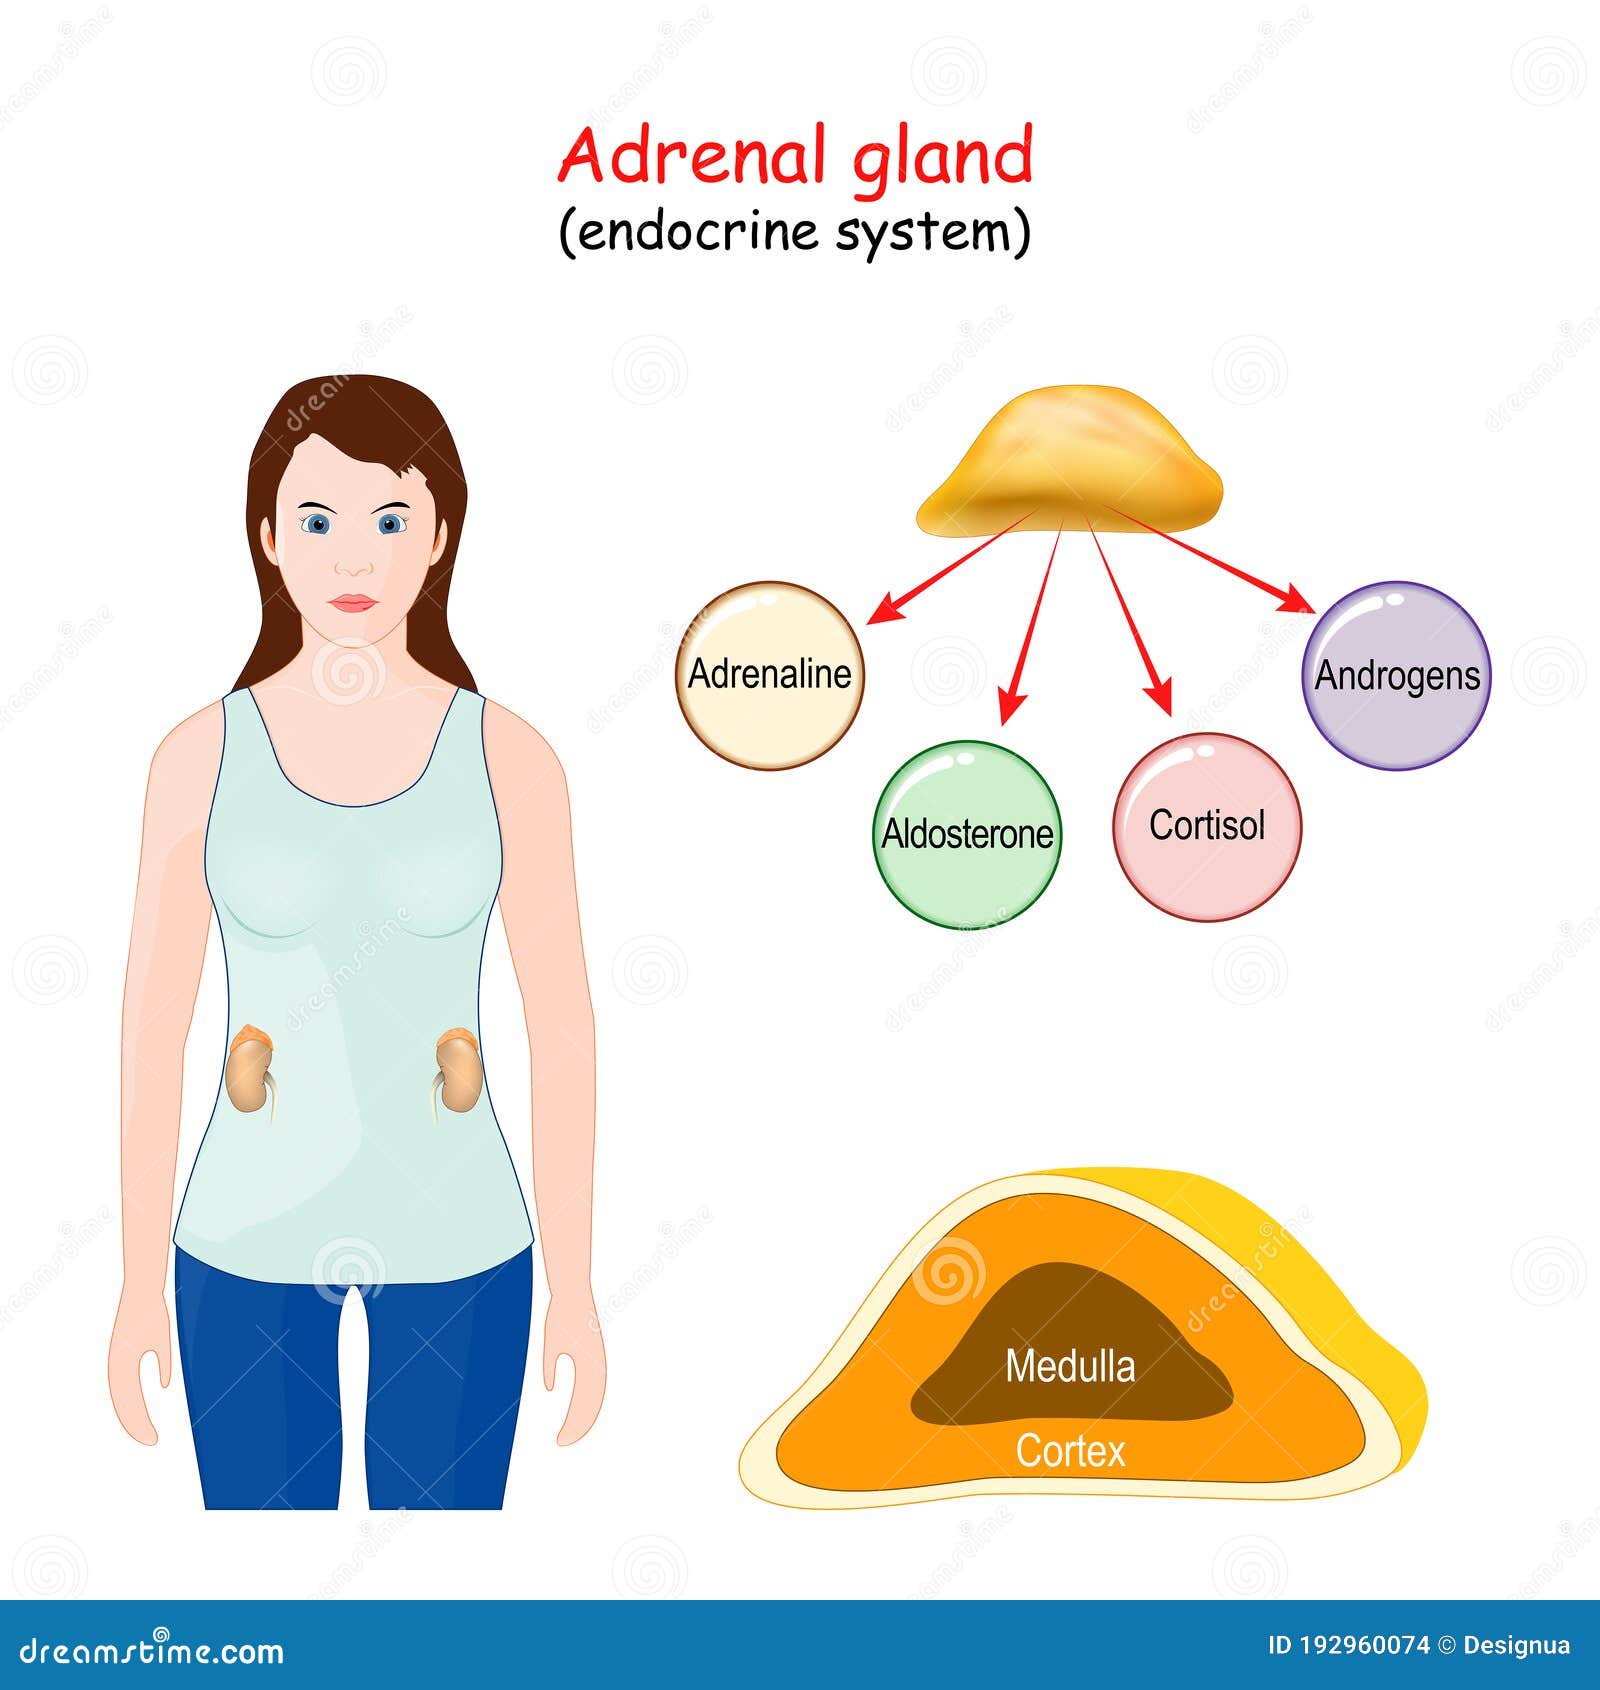 adrenal glands control hormones to function